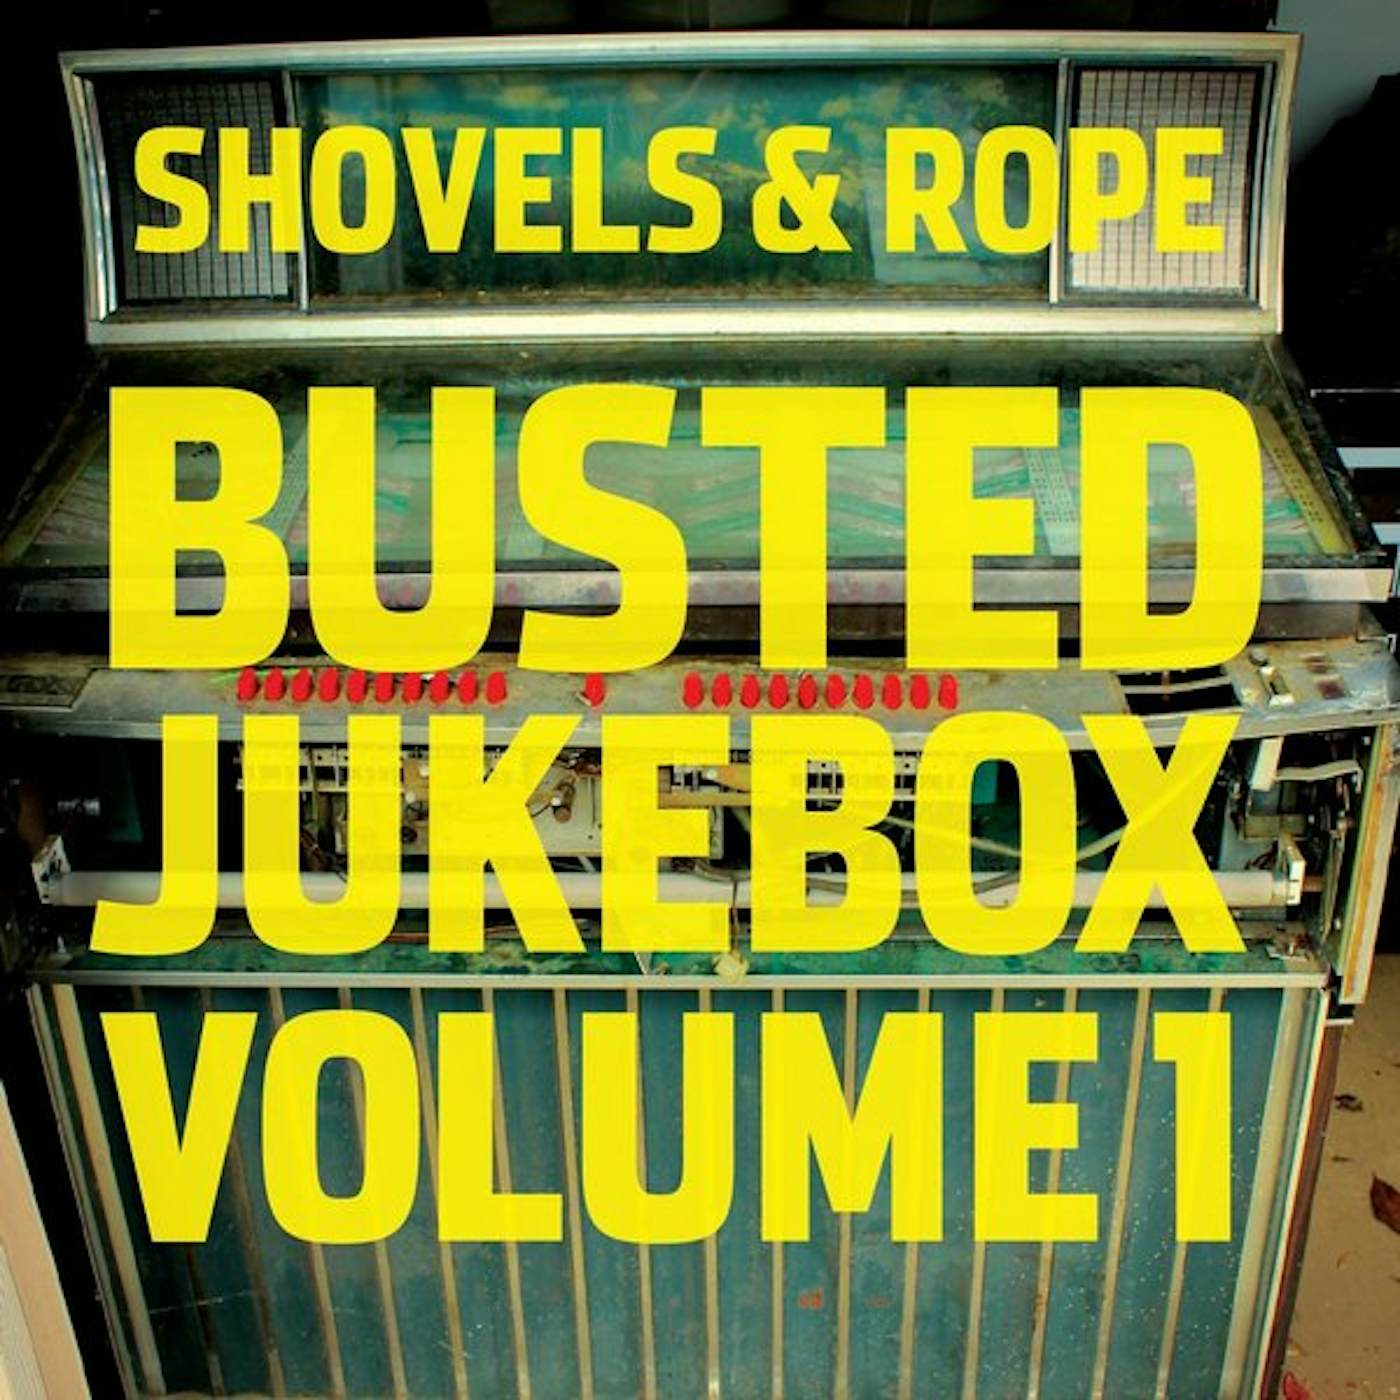 Shovels & Rope BUSTED JUKEBOX: VOLUME 1 Vinyl Record